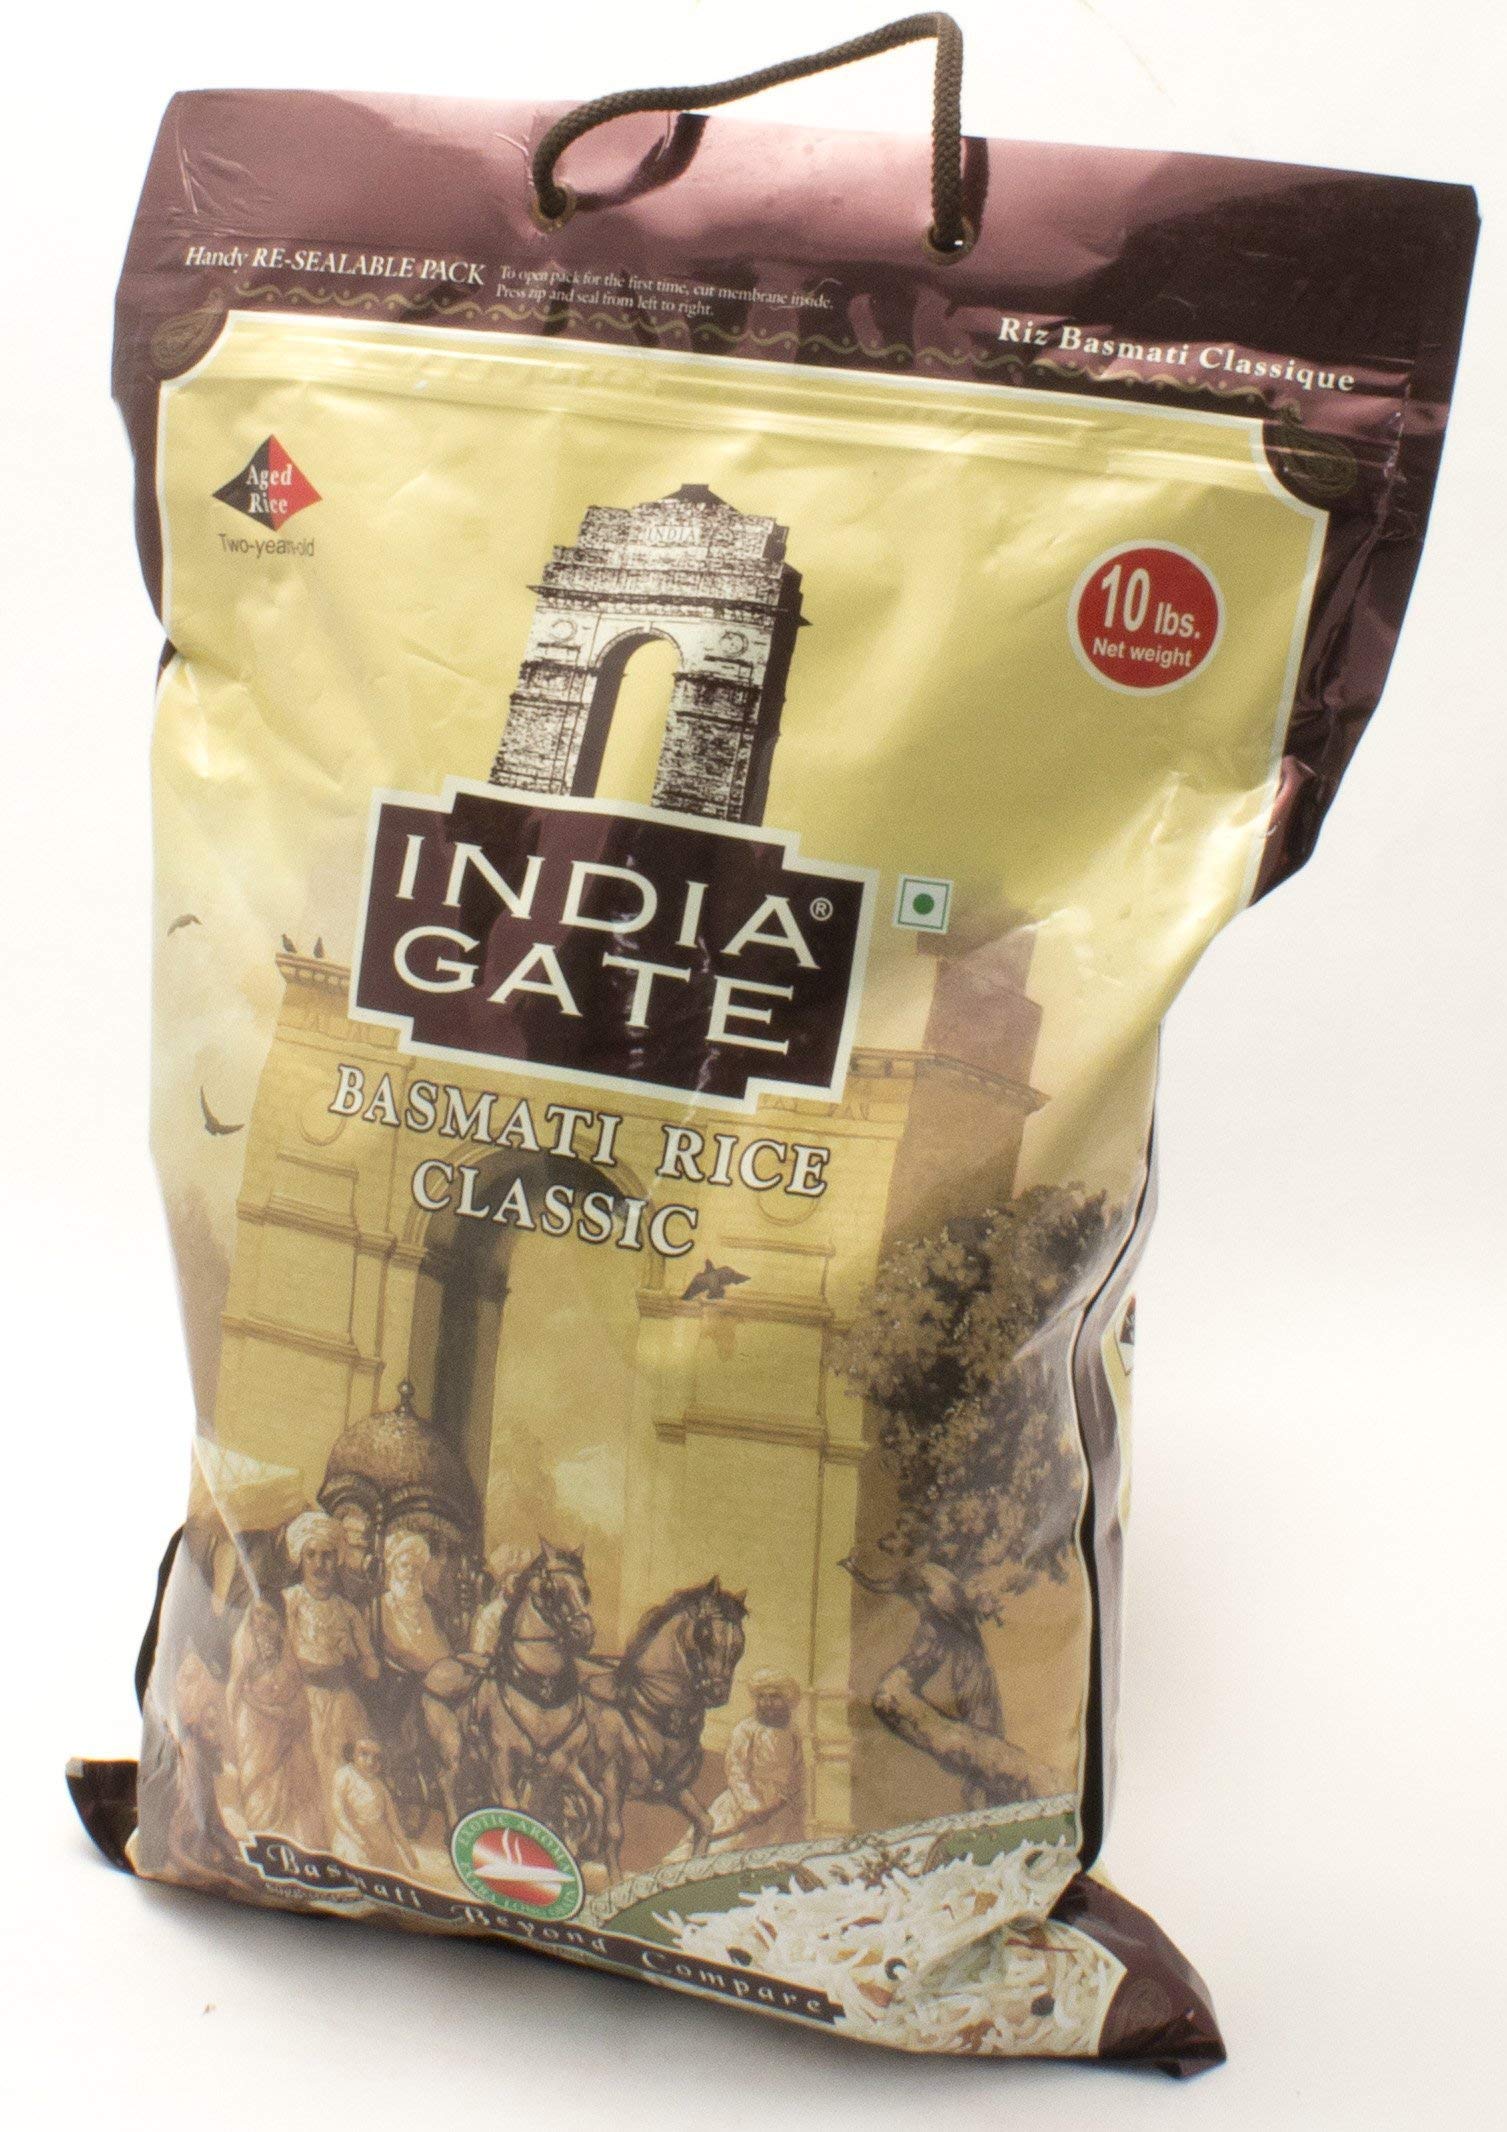 India Gate - White Basmati Rice - Classic, 10 Pound